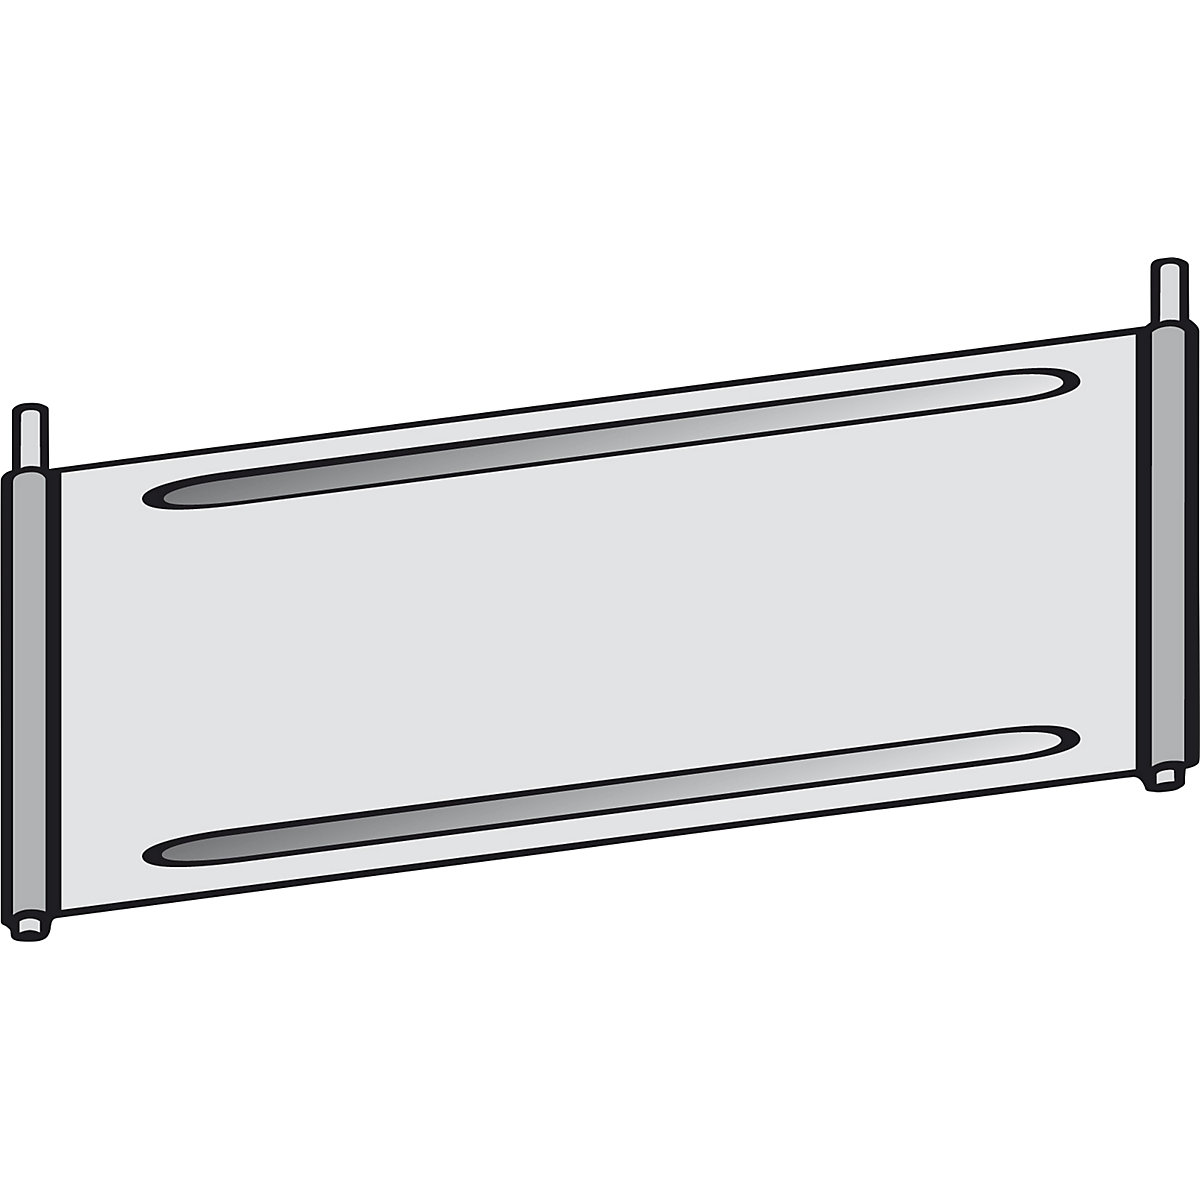 Shelf partition for compartment shelf unit – hofe, zinc-plated, for shelf, WxD 1000 x 500 mm-3